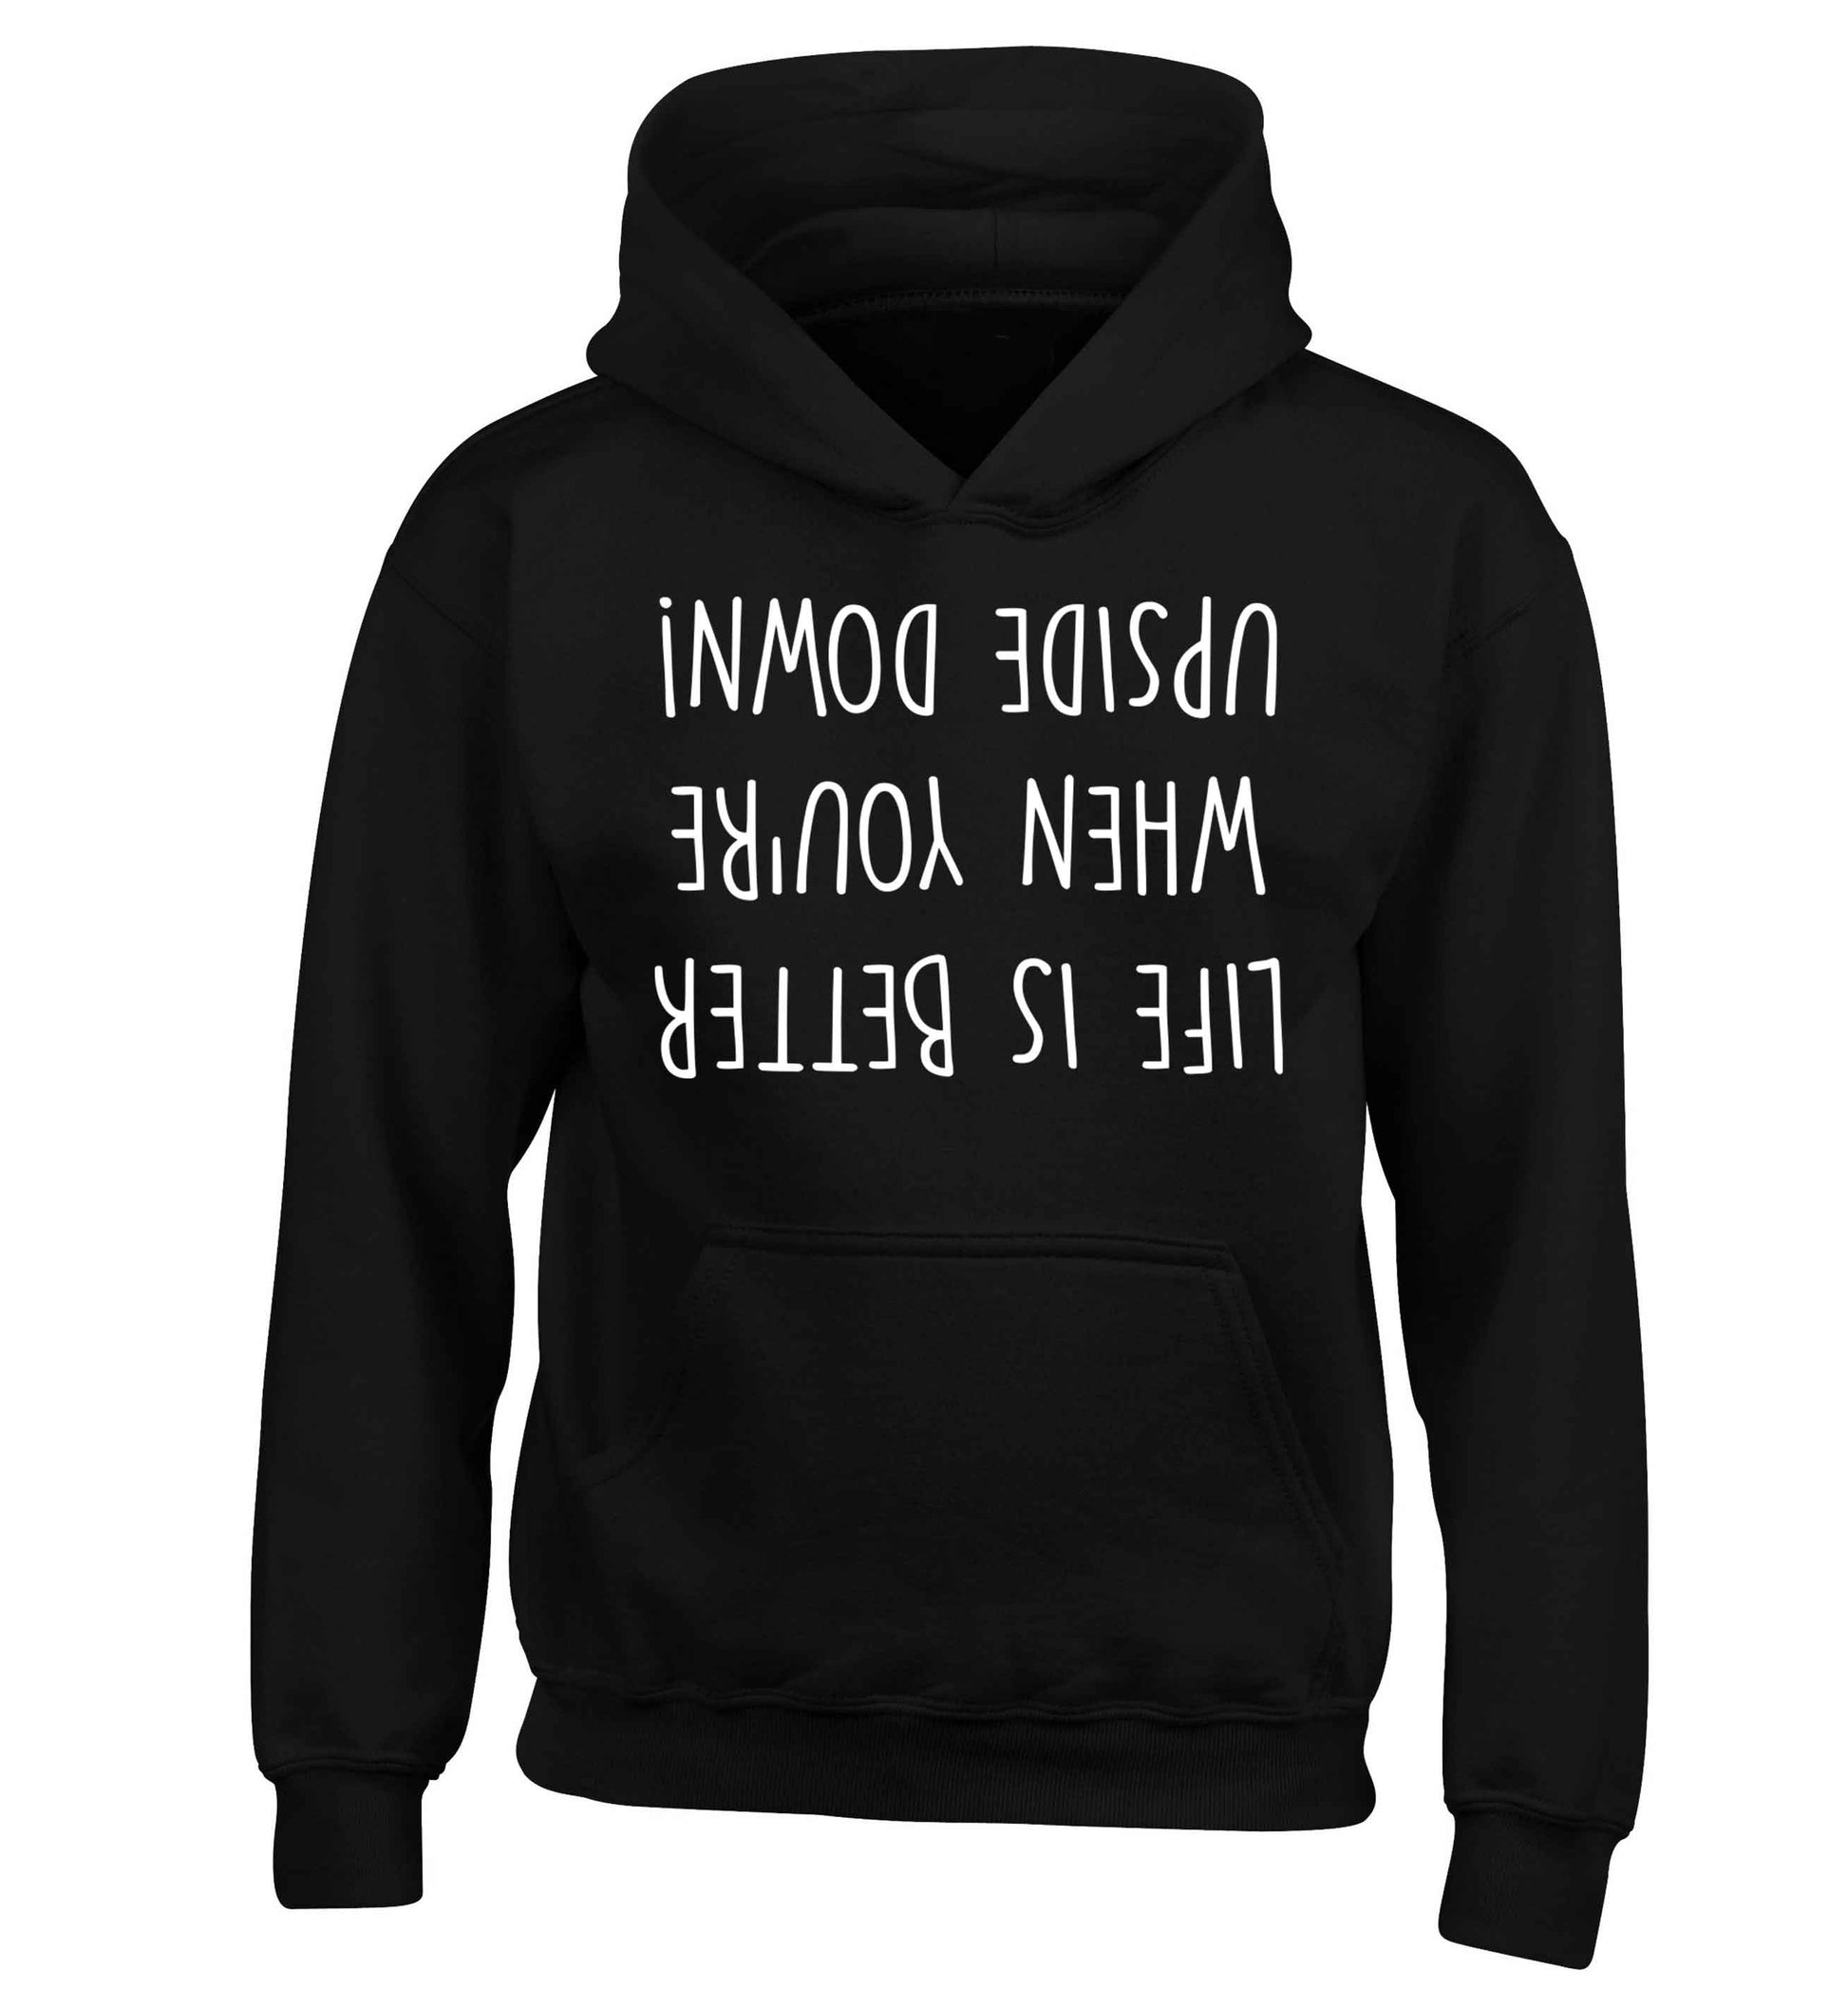 Life is better upside down children's black hoodie 12-13 Years